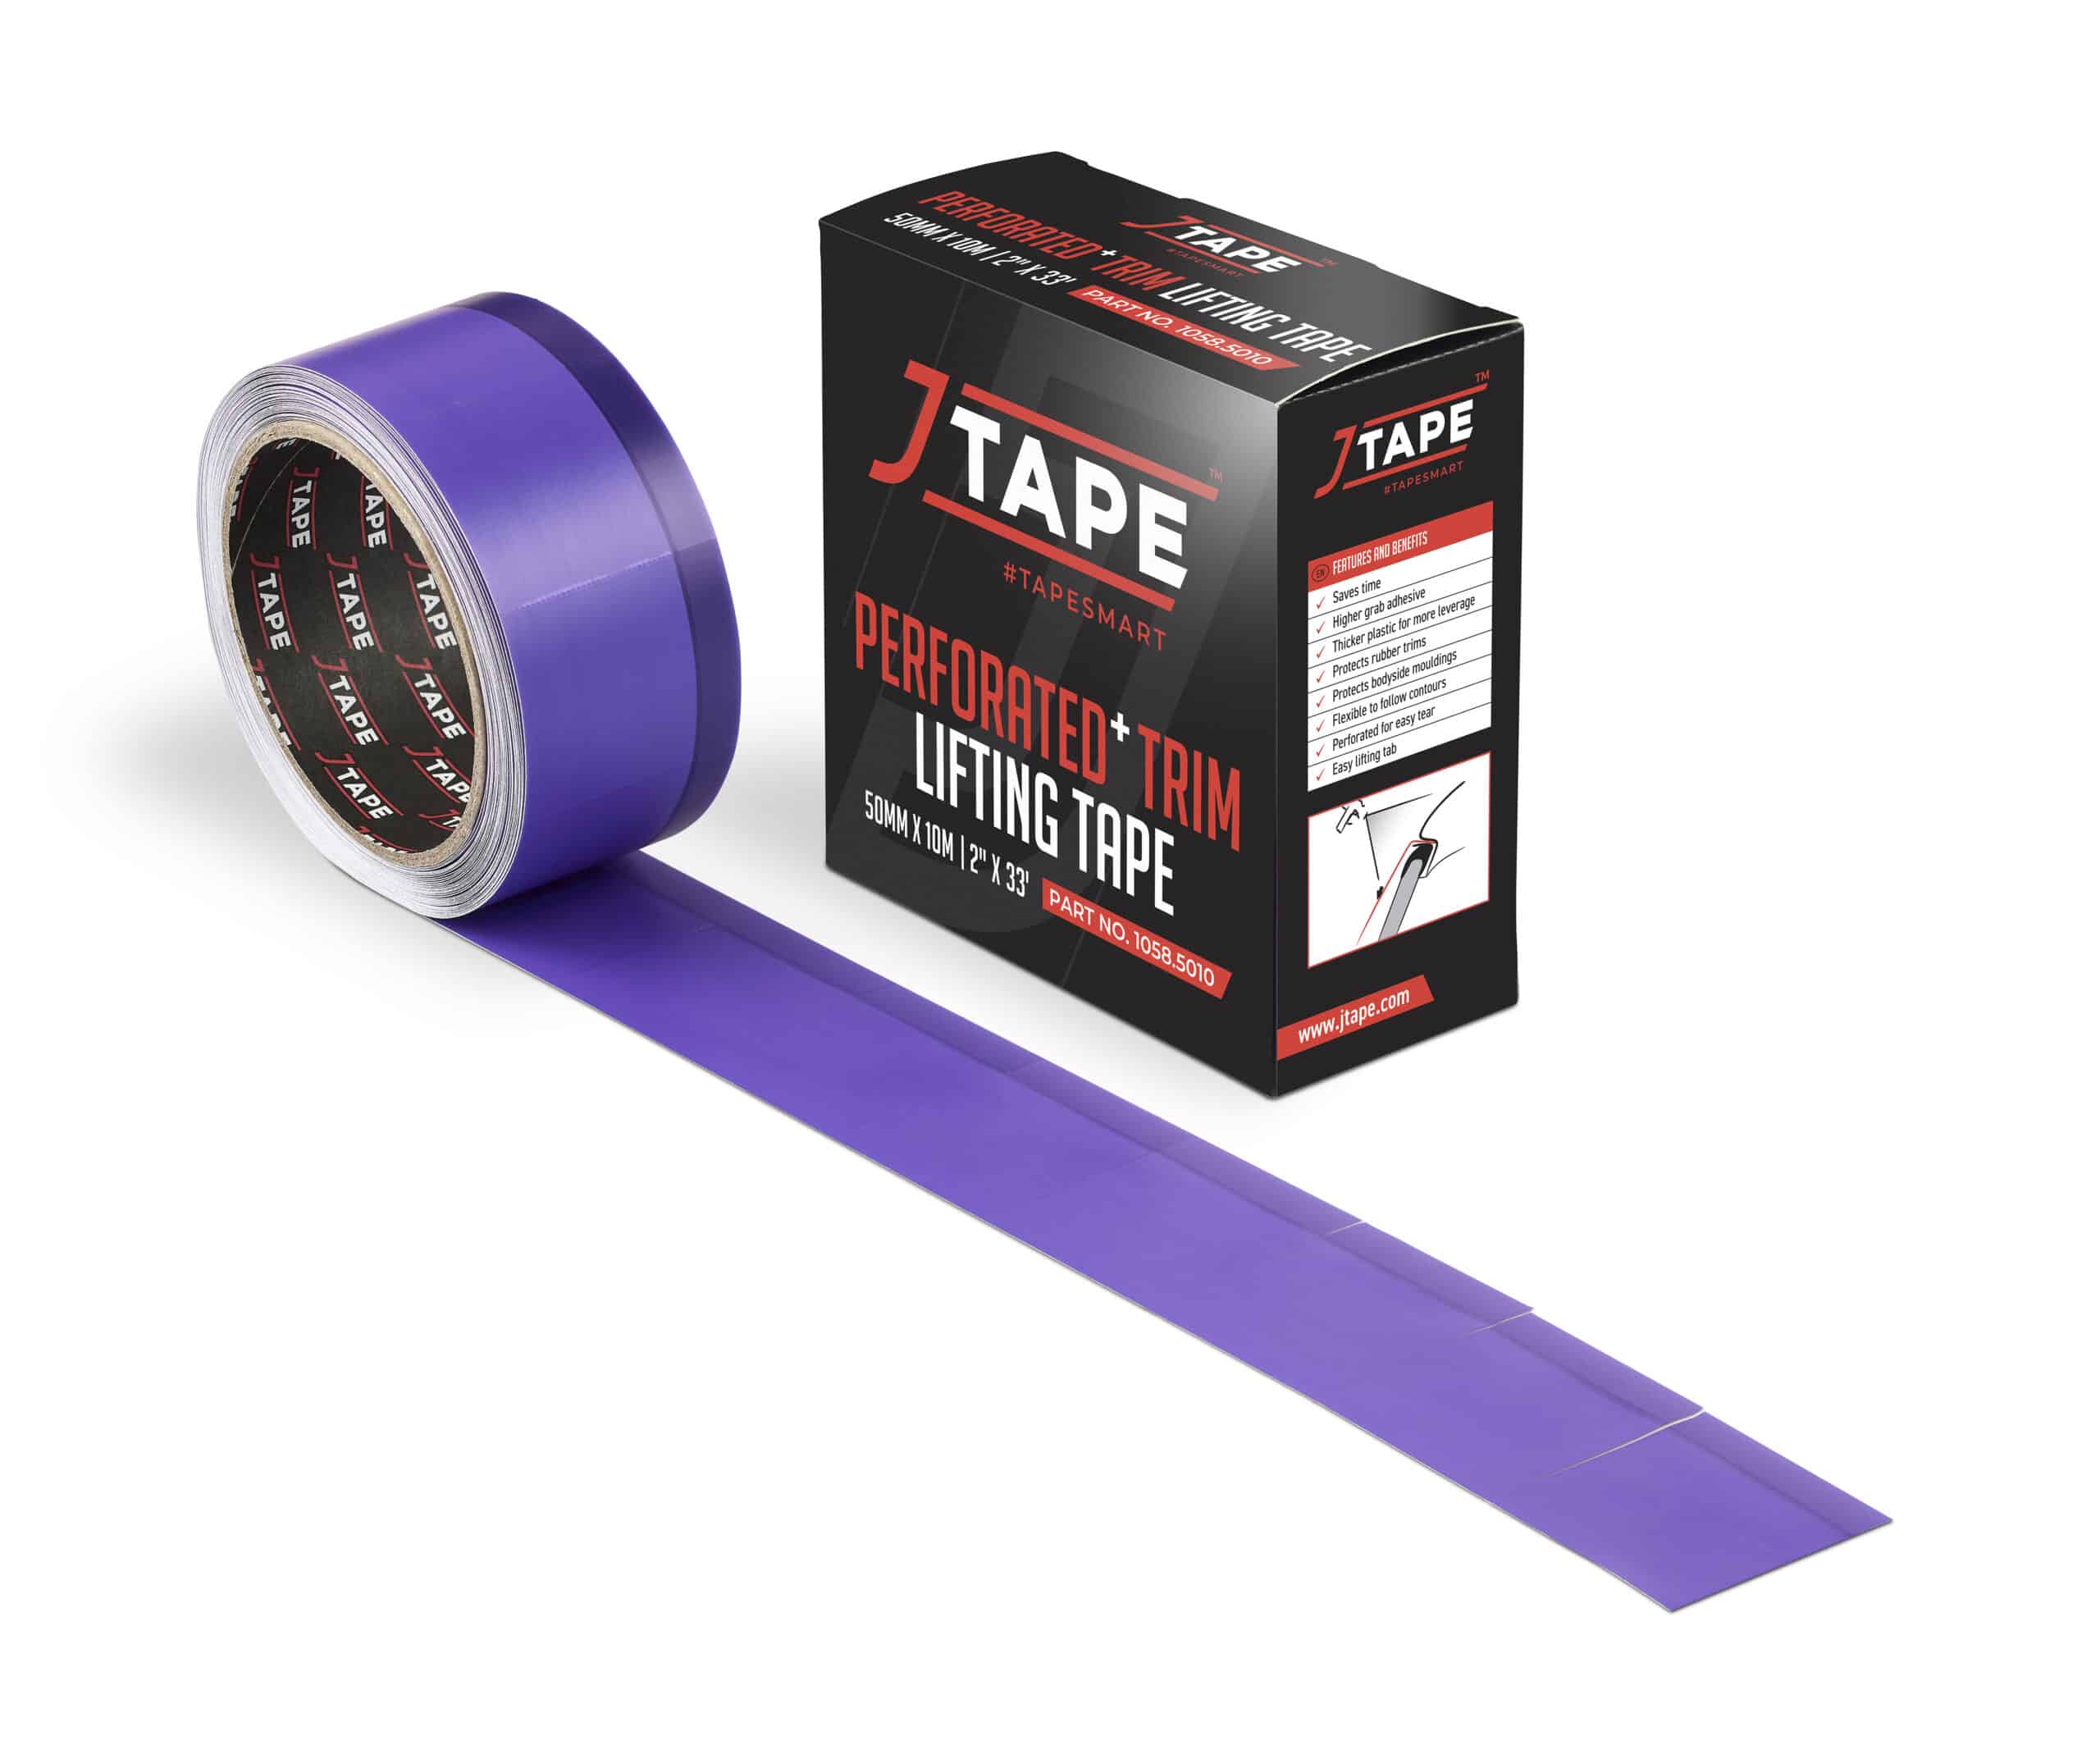 Perforated Plus Trim Lifting Tape